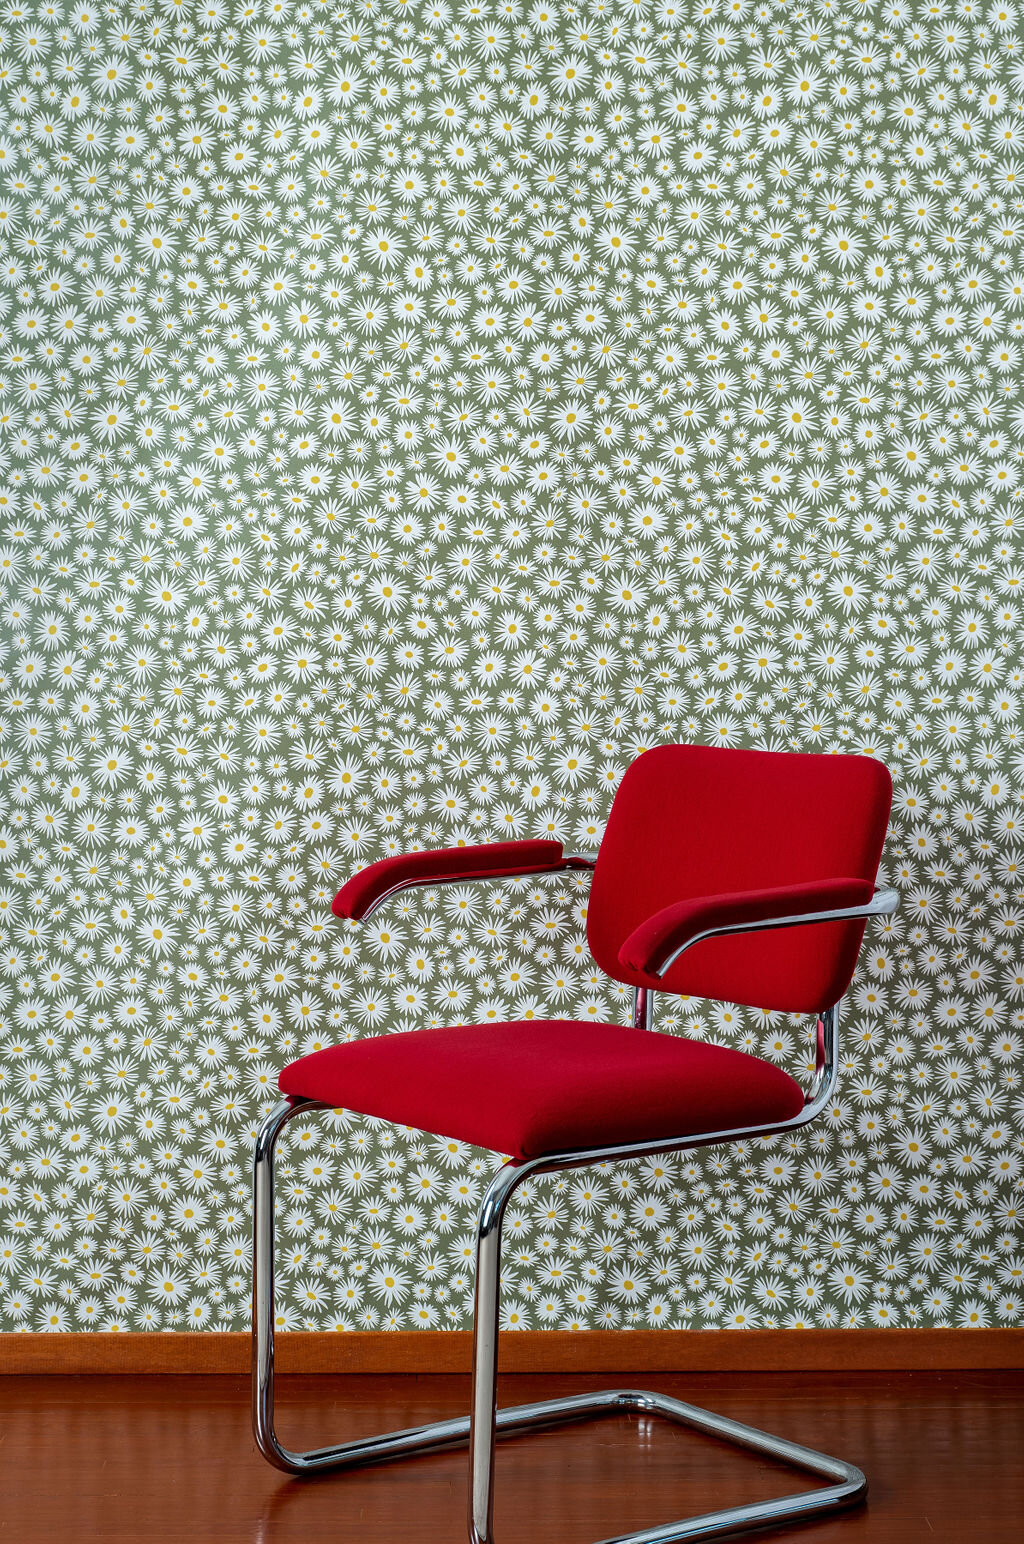 Kate Golding Daisy (Green) wallpaper // Modern wallcoverings and interior decor.